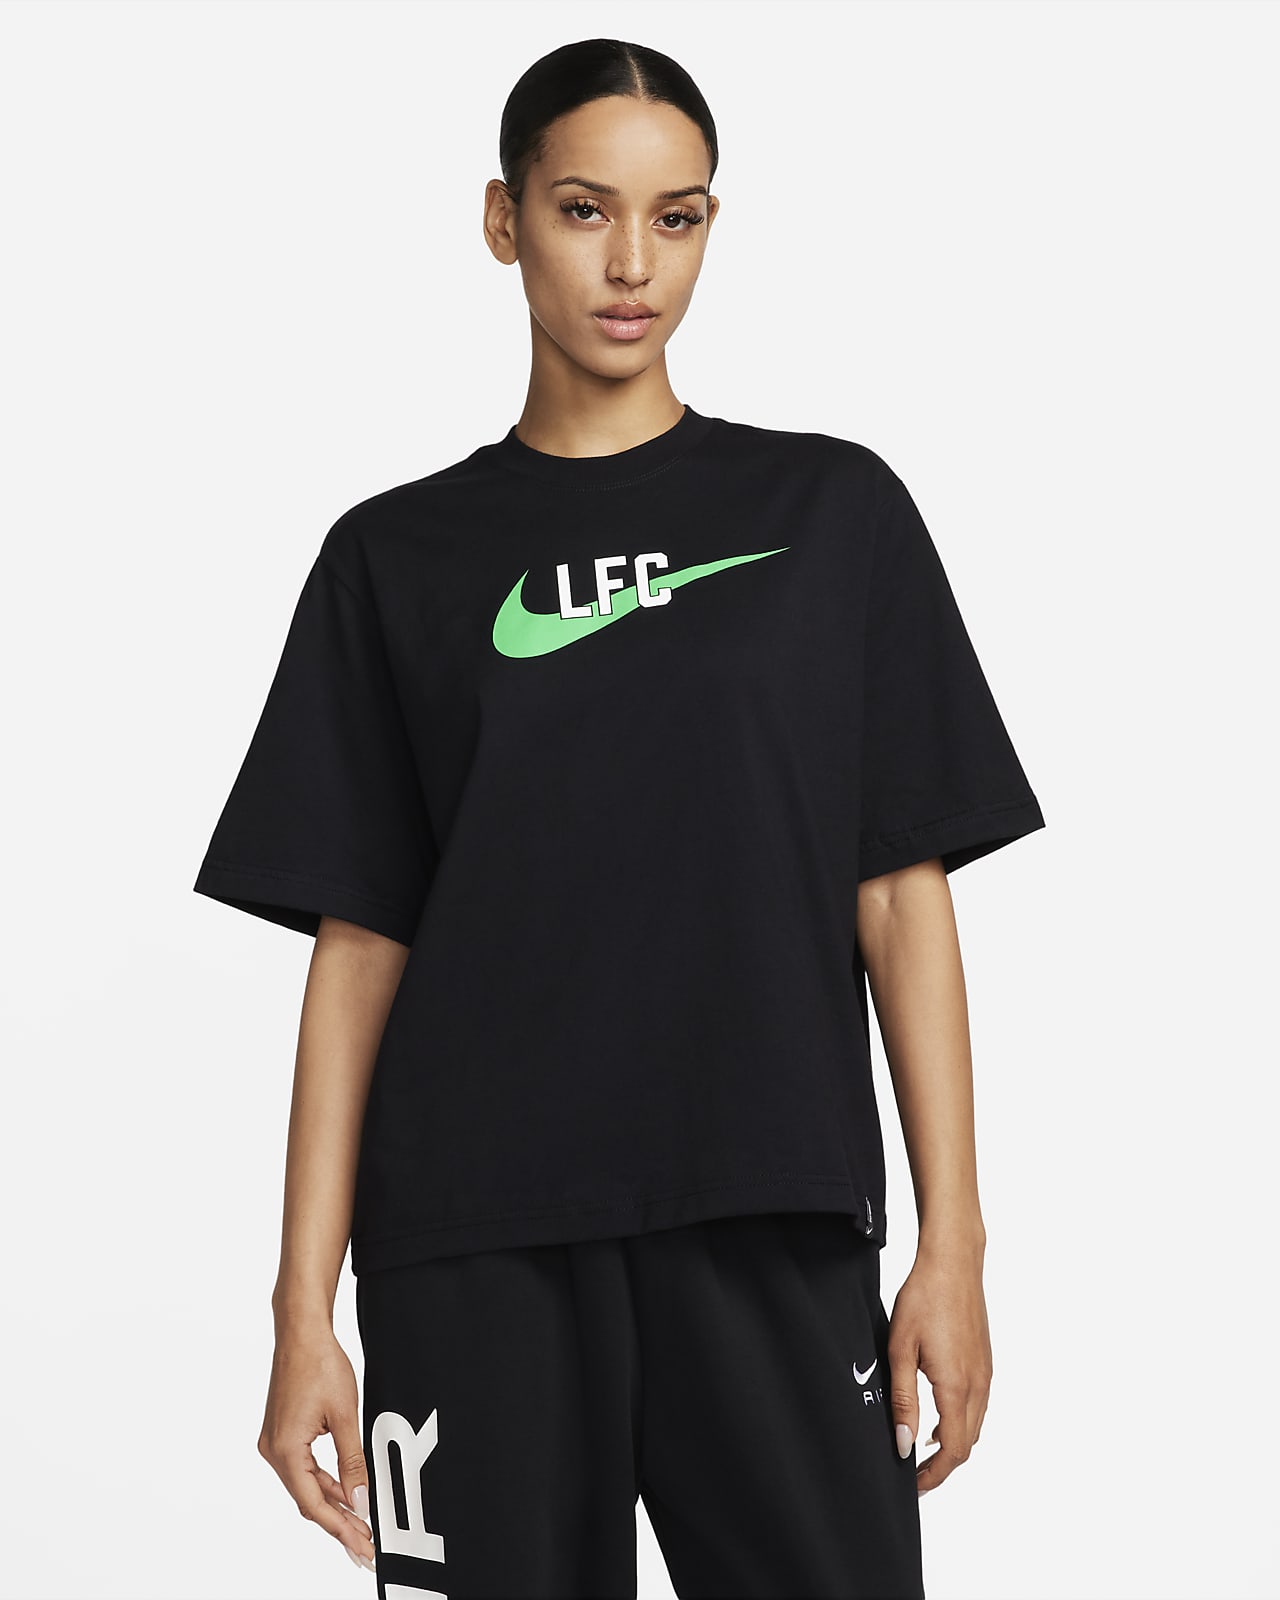 Liverpool F.C. Swoosh Women's Nike Football T-Shirt